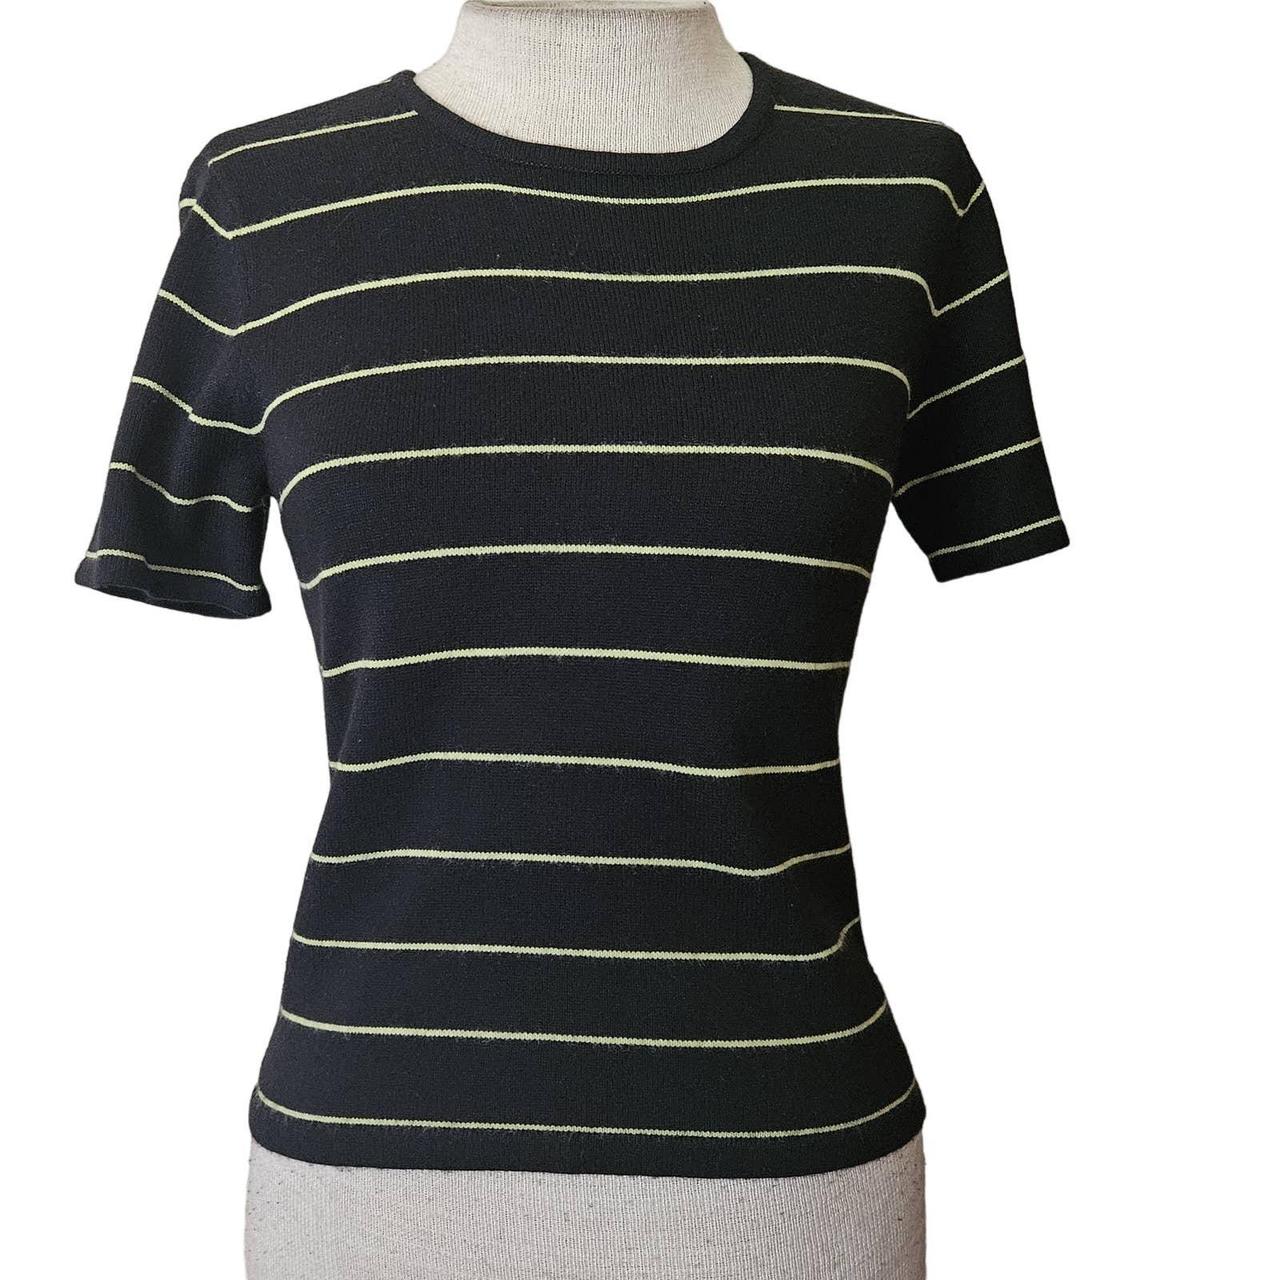 Navy Striped Sweater Size 4 Petite Good pre loved - Depop